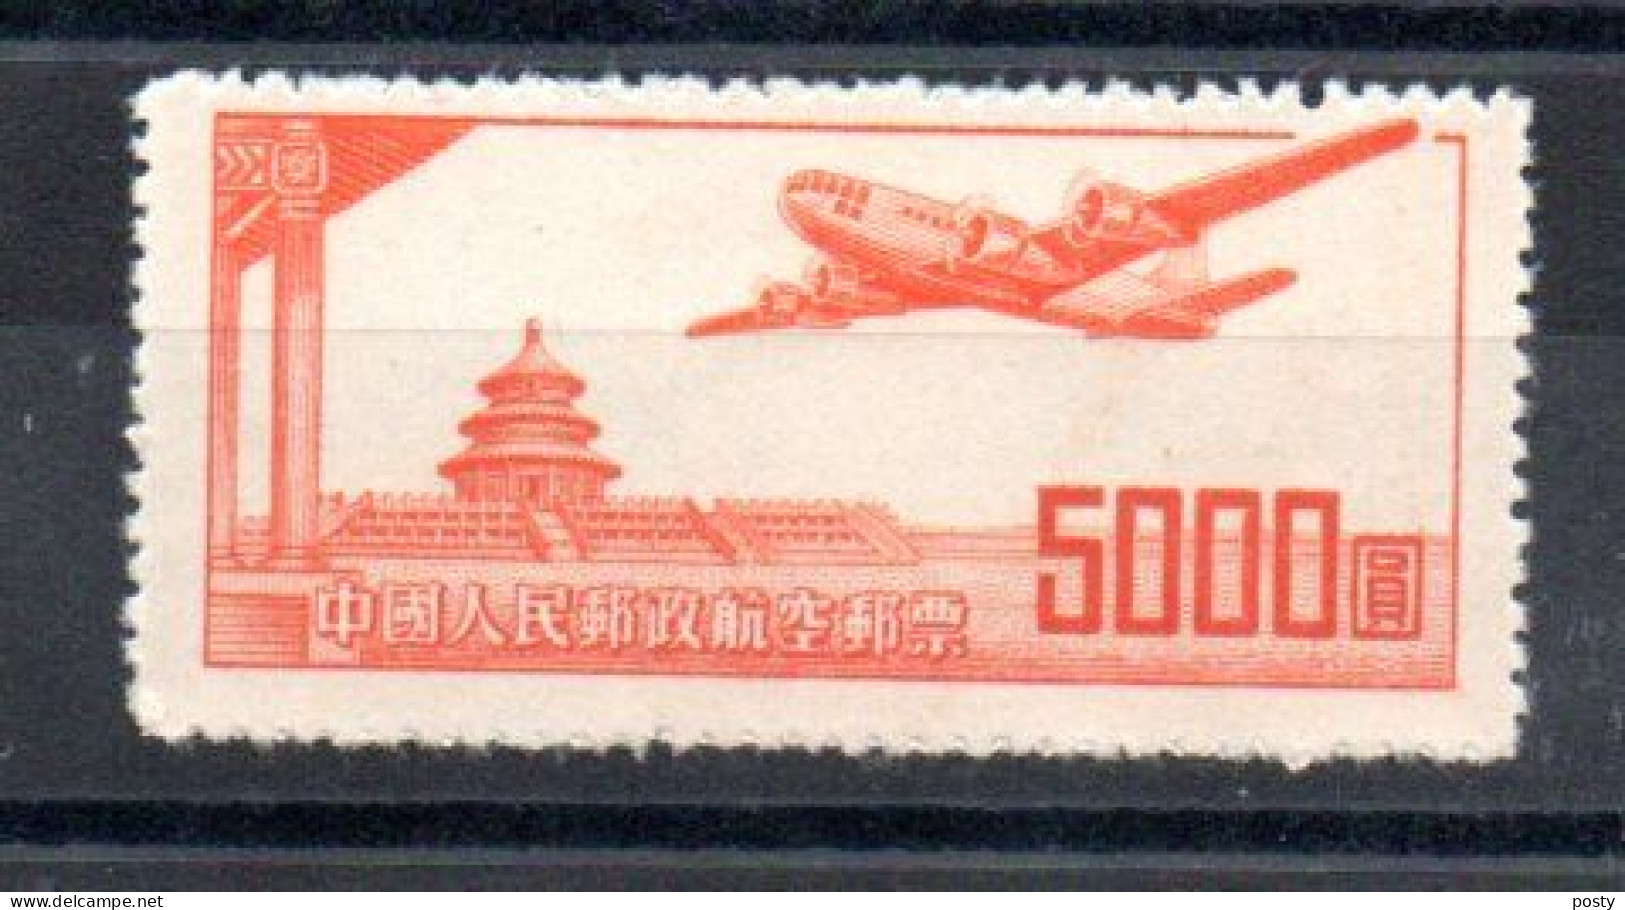 CHINE - CHINA - 1951 - POSTE AERIENNE - AIRMAIL - AVION - AIRCRAFT - TEMPLE DU CIEL - TEMPLE OF HEAVEN - 5000 - - Airmail